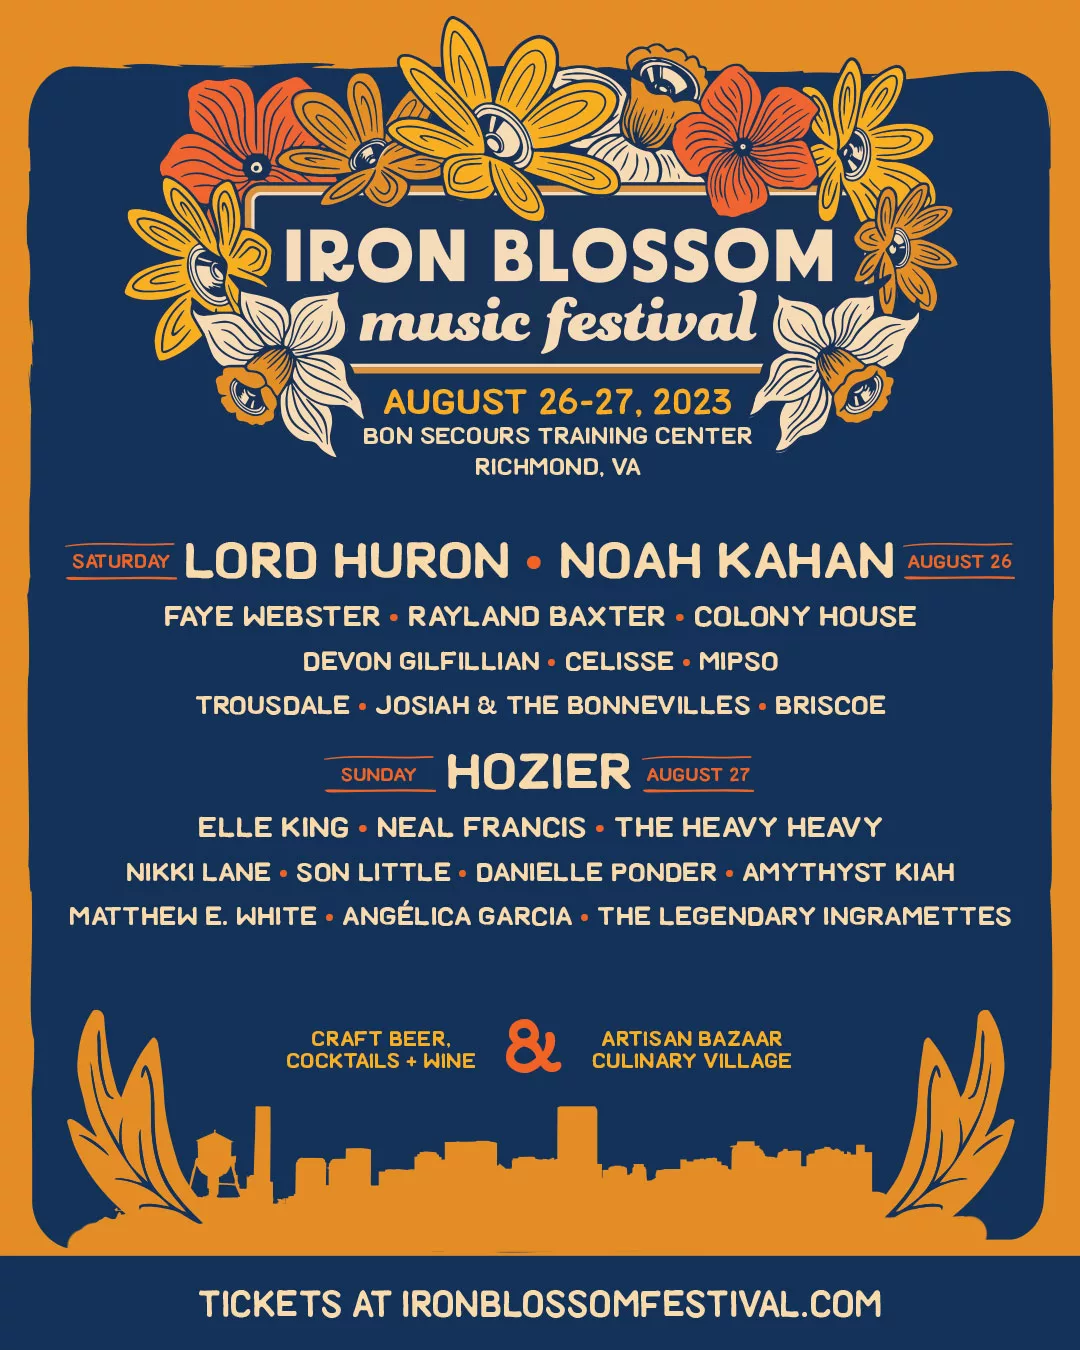 Iron Blossom Music Festival Announces Inaugural 2023 Daily Lineup